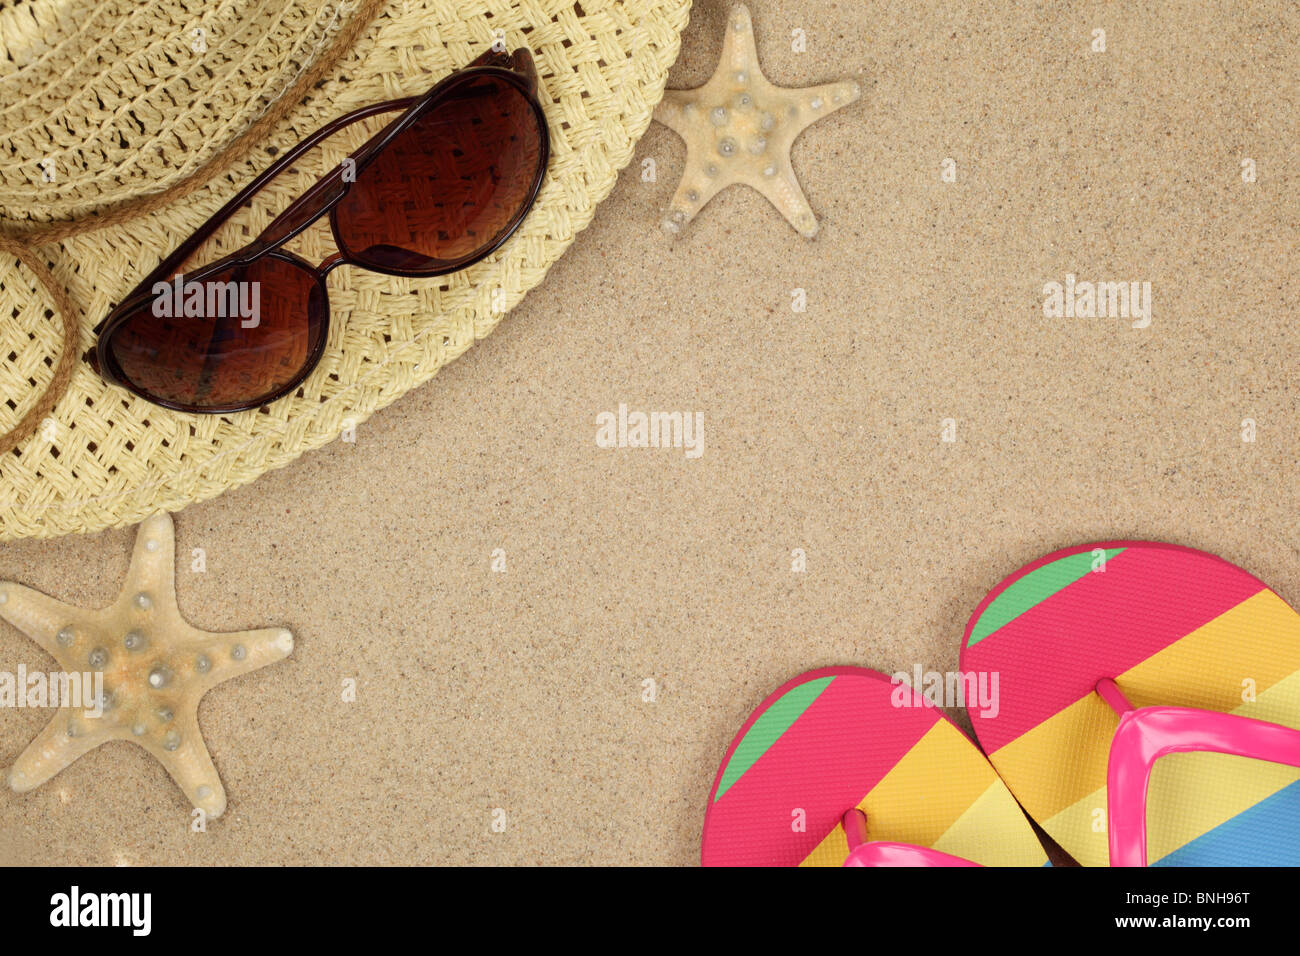 Colorful summer beachwear, flip flops, hat, sunglasses and starfish on sand beach. Stock Photo